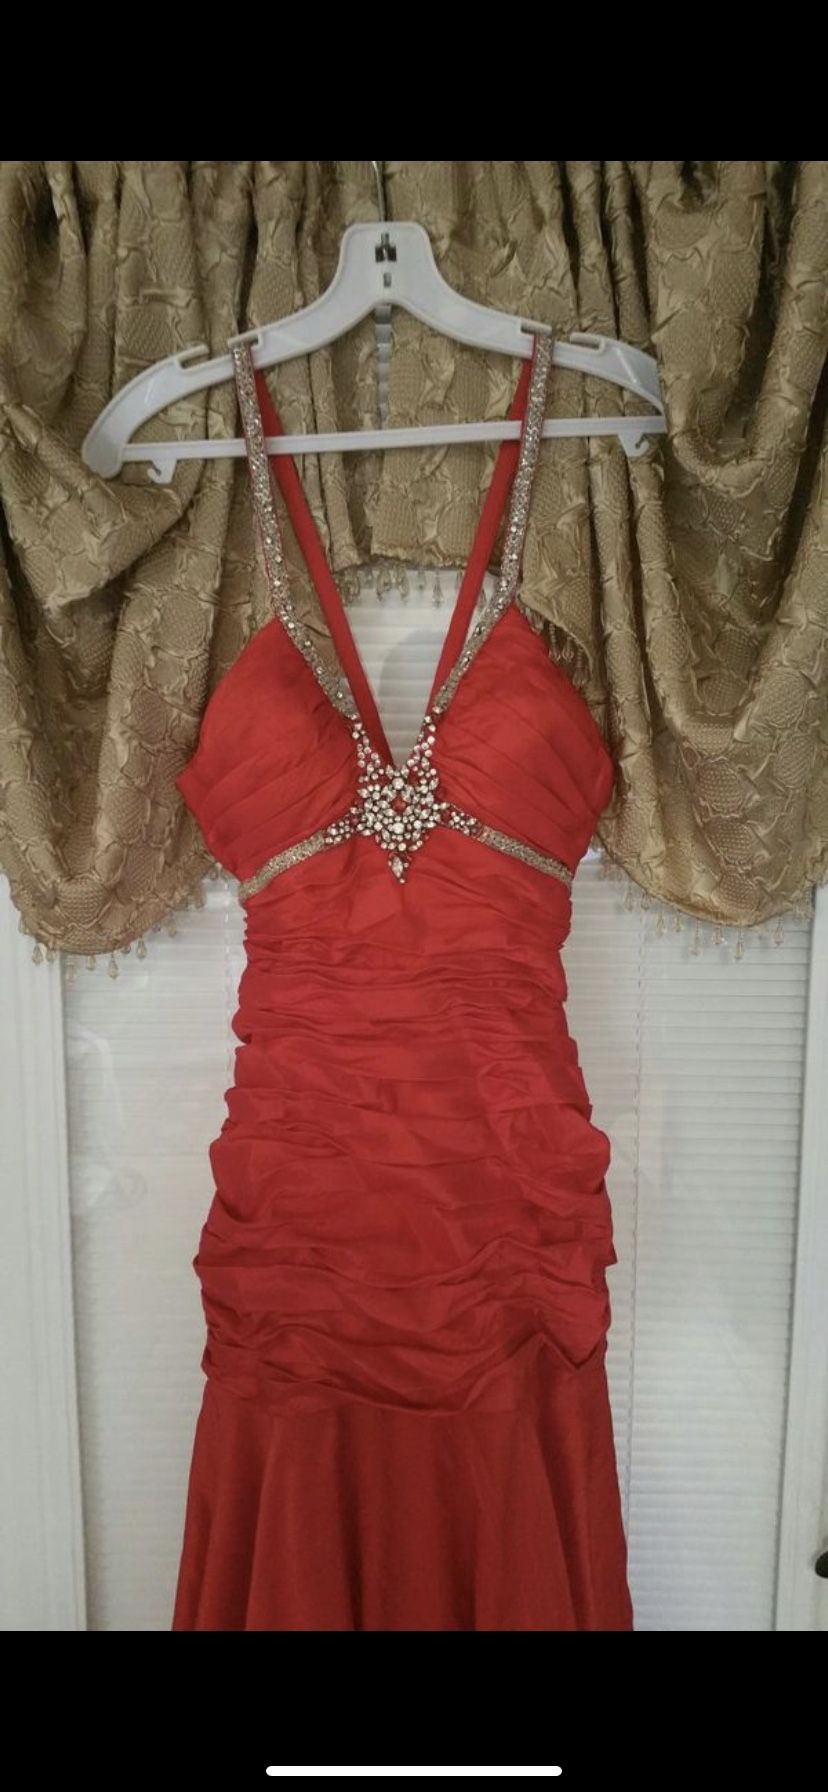 Breathtaking Red Prom Dress SZ 0 - Never Worn